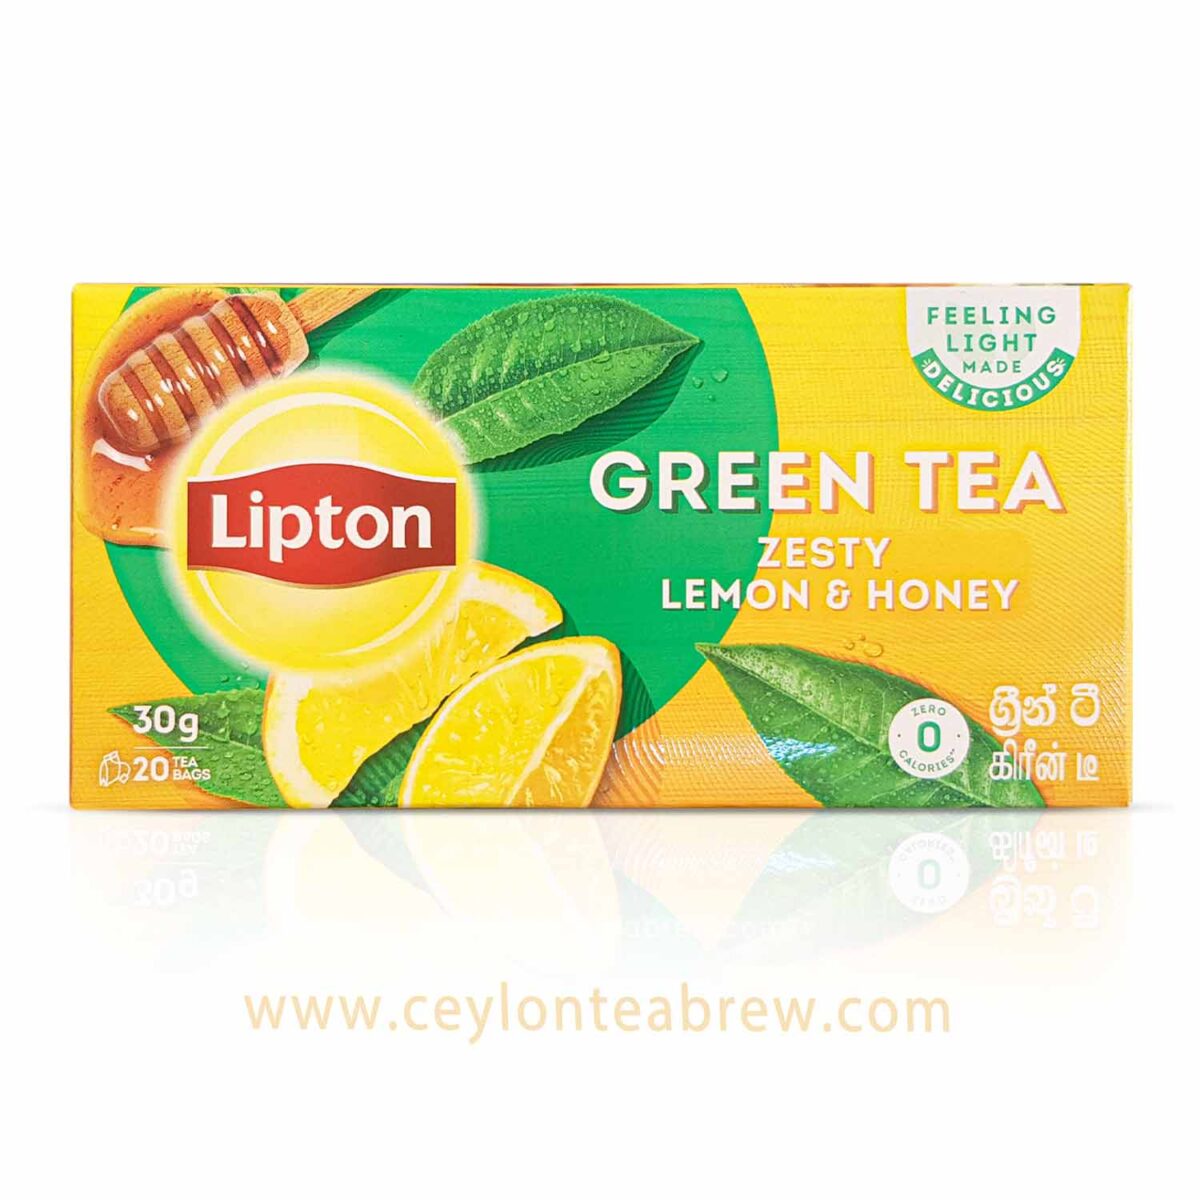 Lipton Ceylon green tea with Zesty lemon and honey flavored tea bags